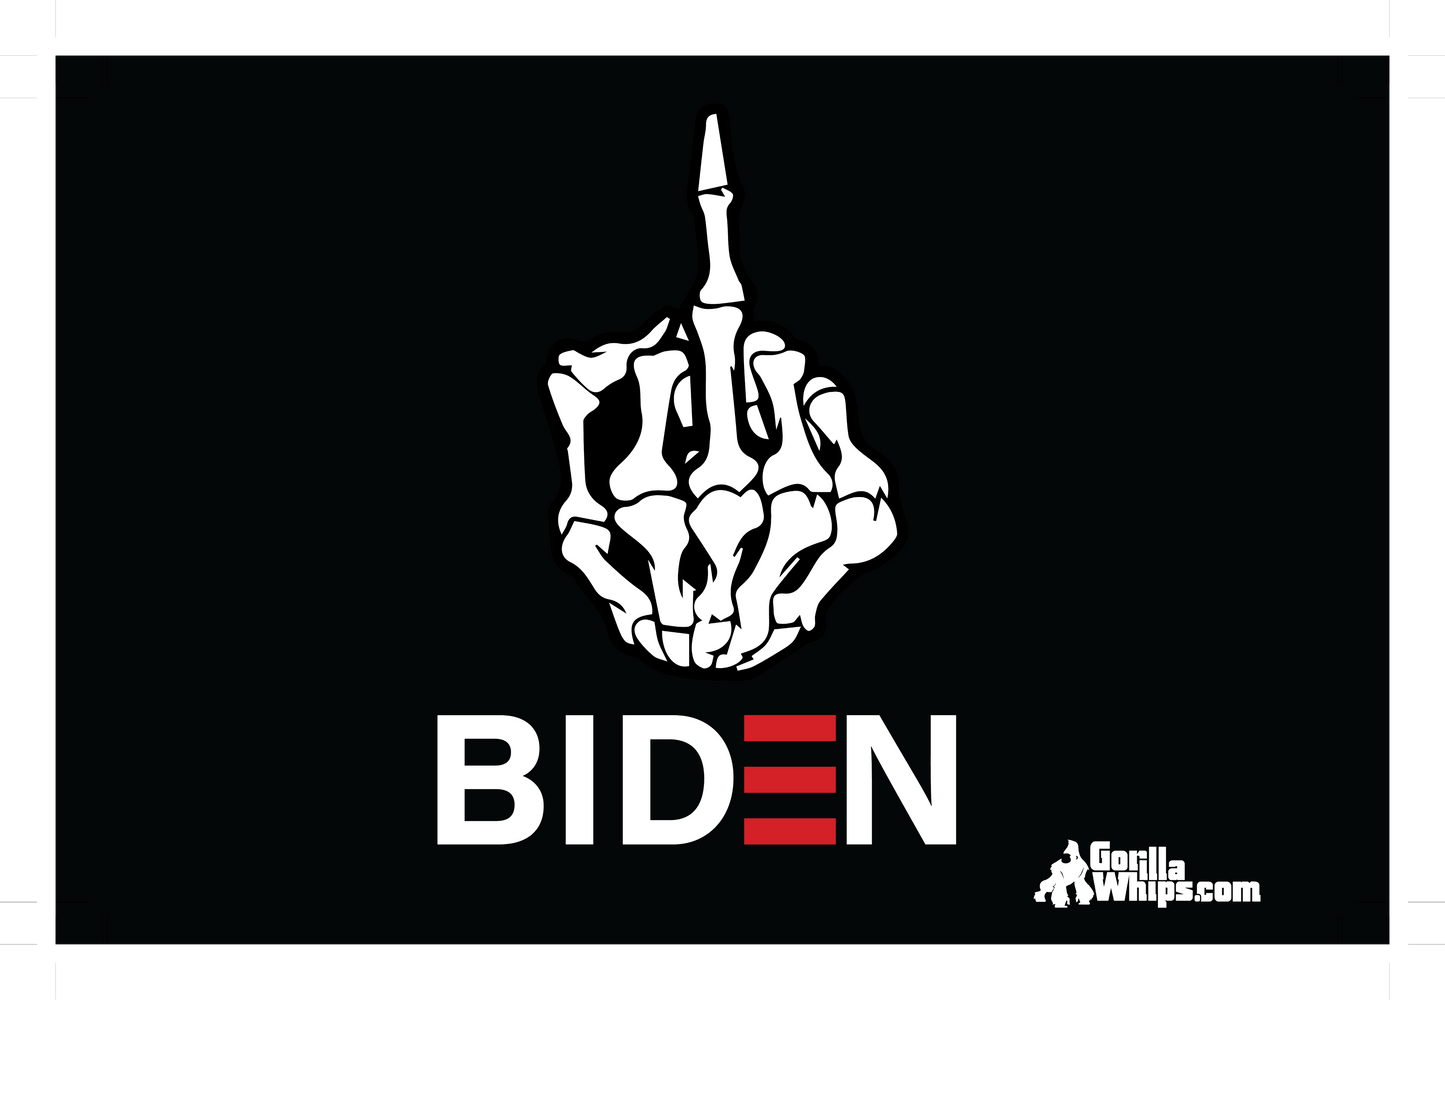 Skeleton Birdie Biden 12" x 18" Grommet Flag (NEW USA Made Highest Quality)